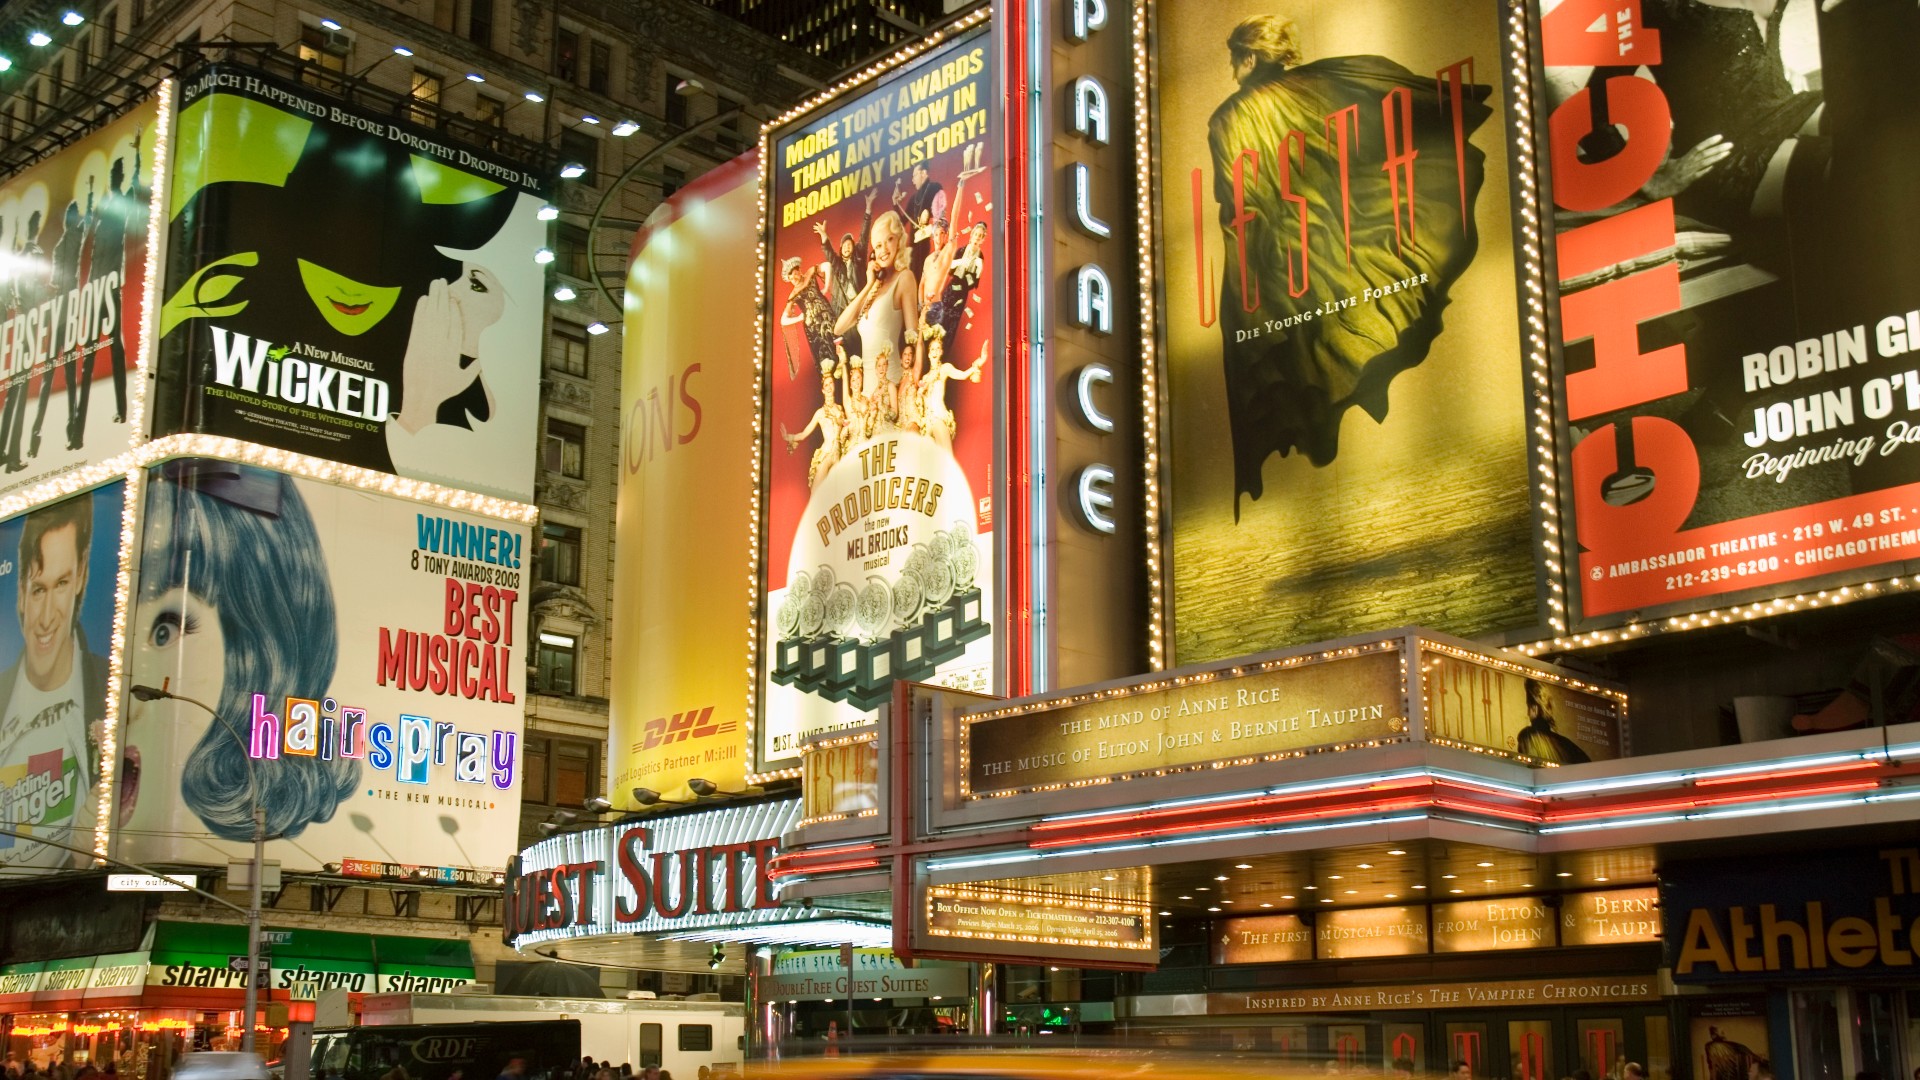 A view of America's famous Broadway theatre scene